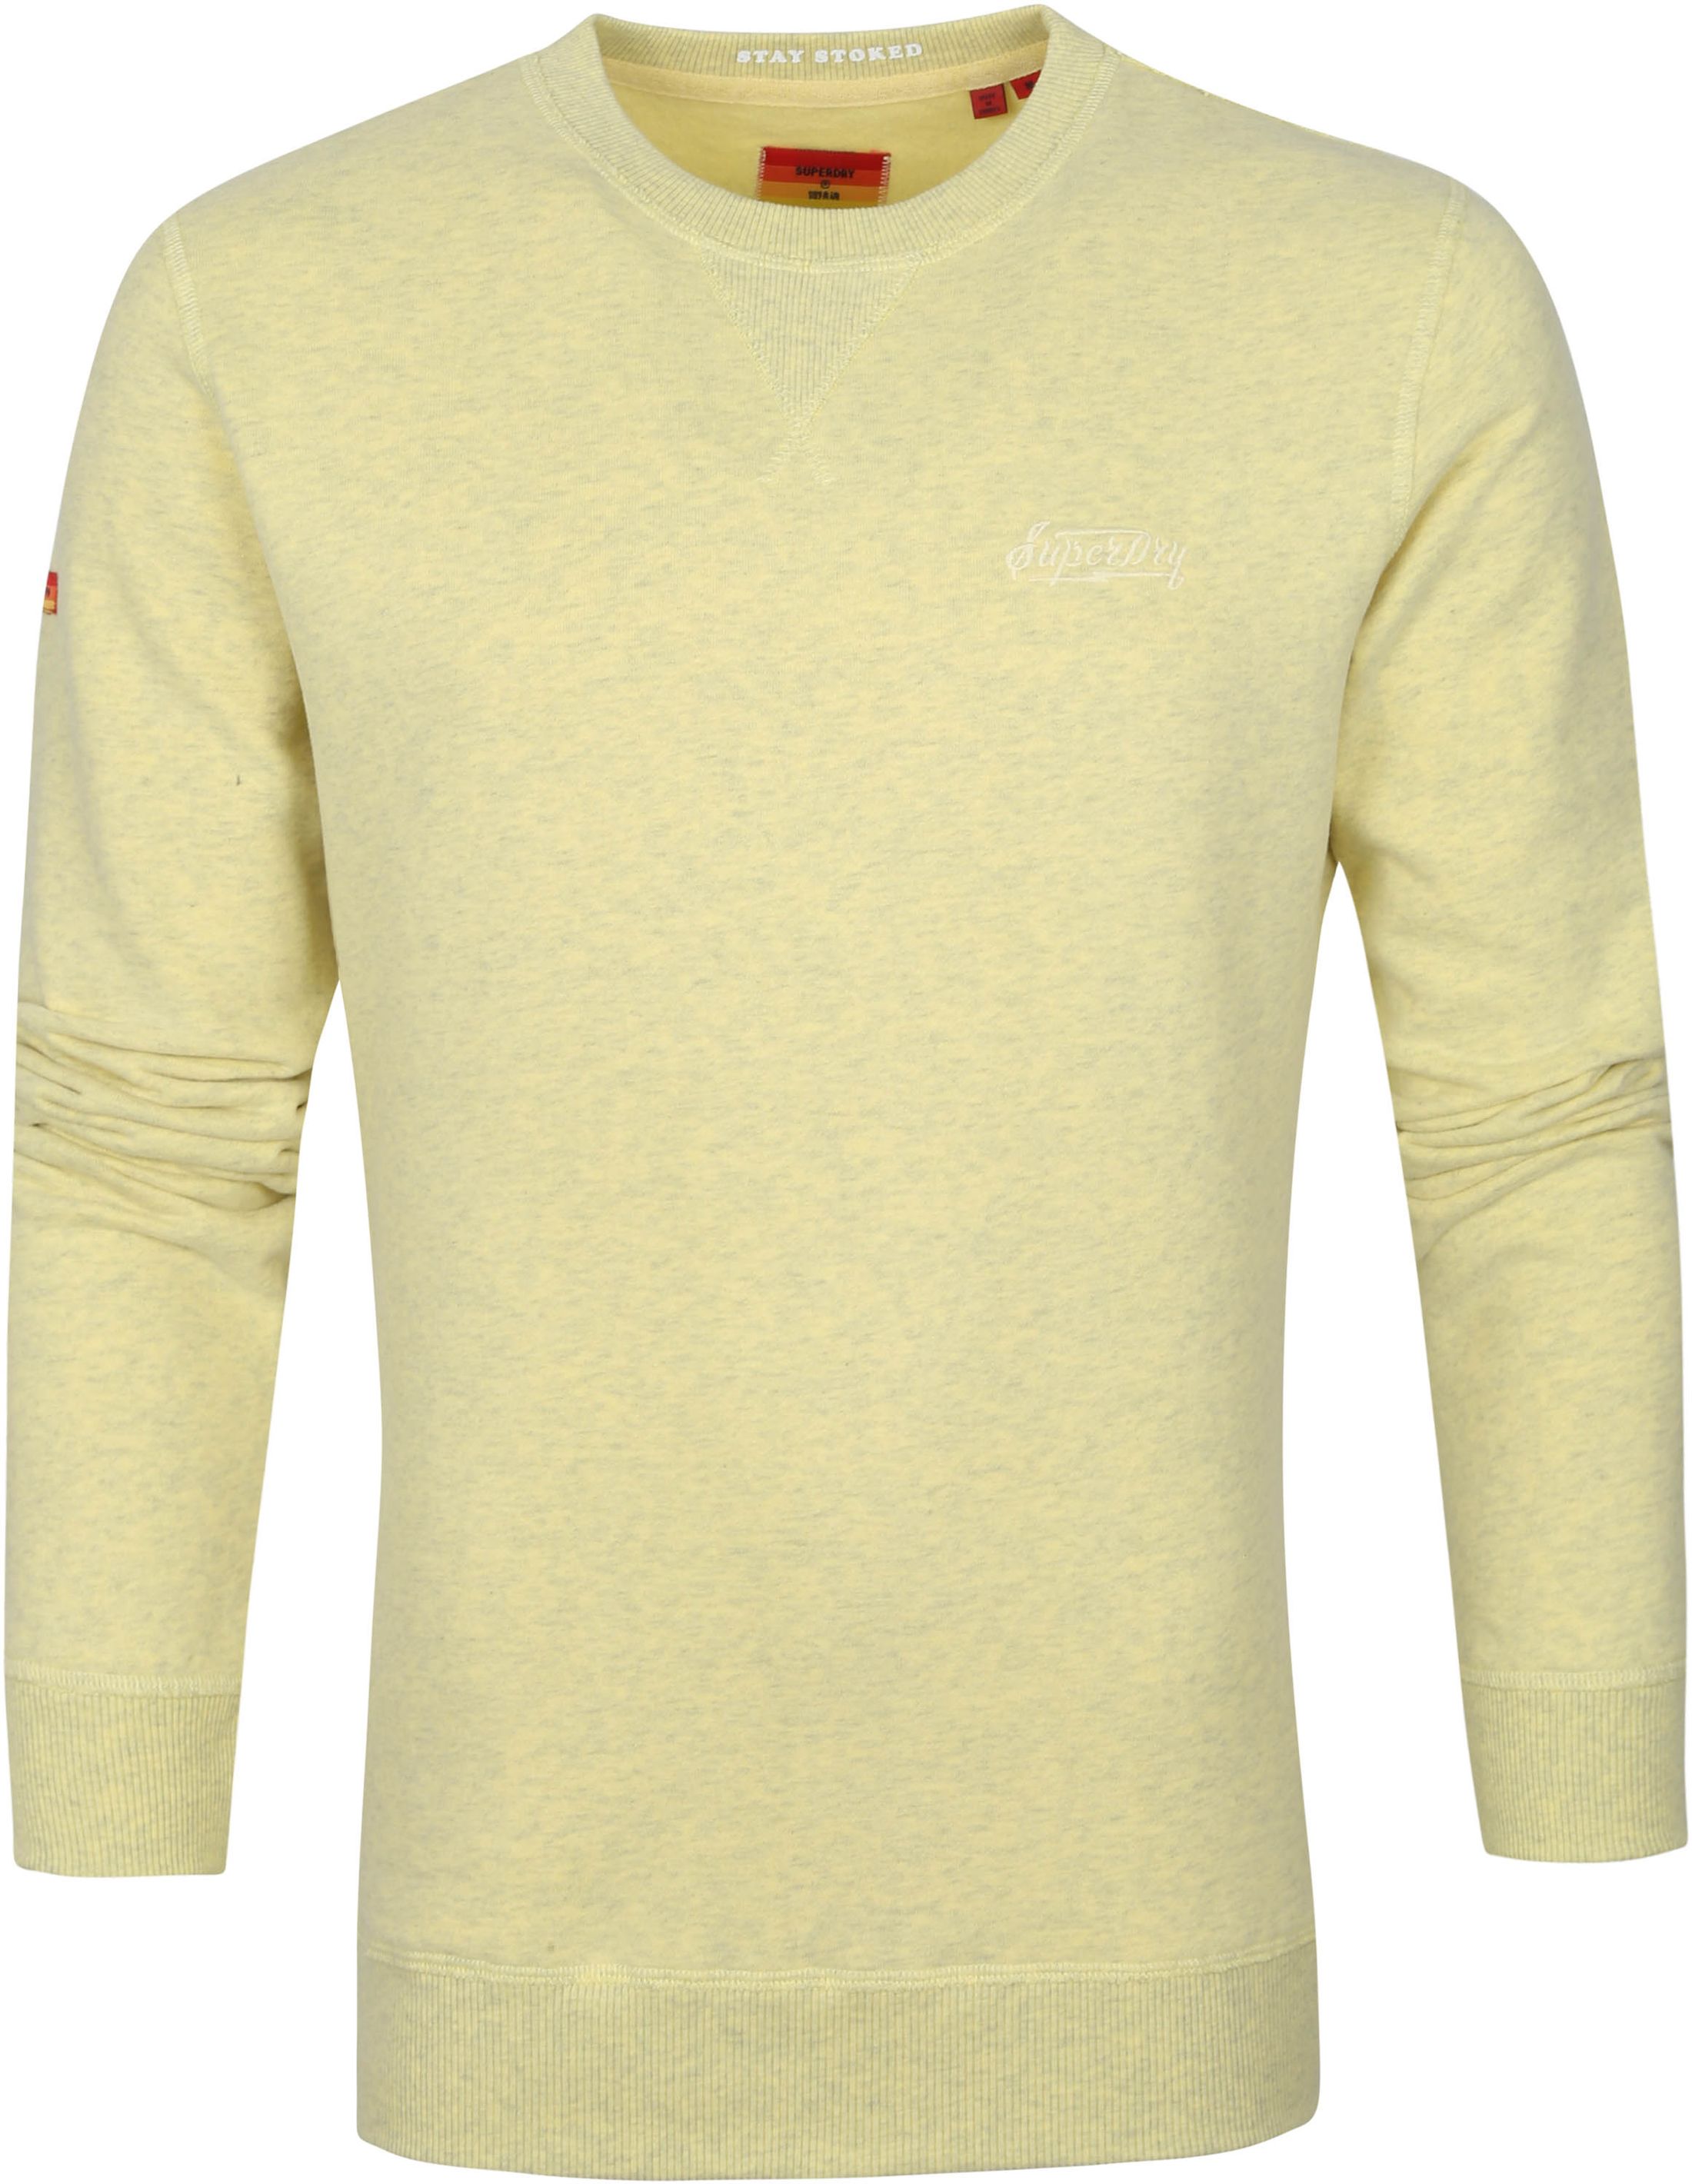 Superdry LA Beach Sweater Yellow size XXL